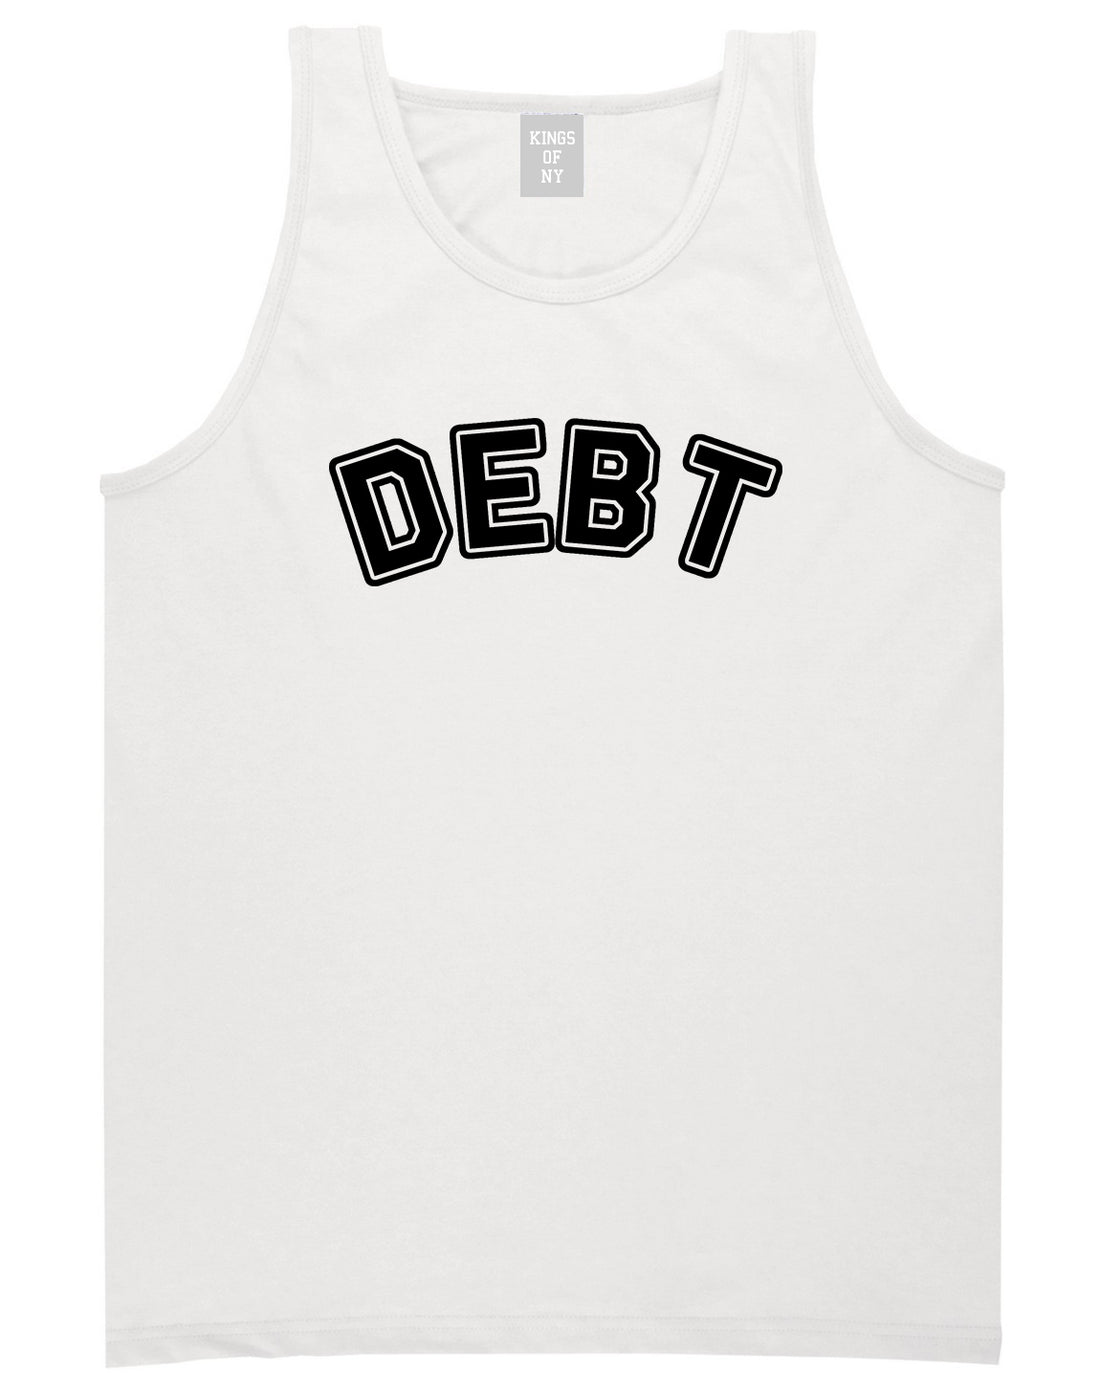 Debt Life T-Shirt in White